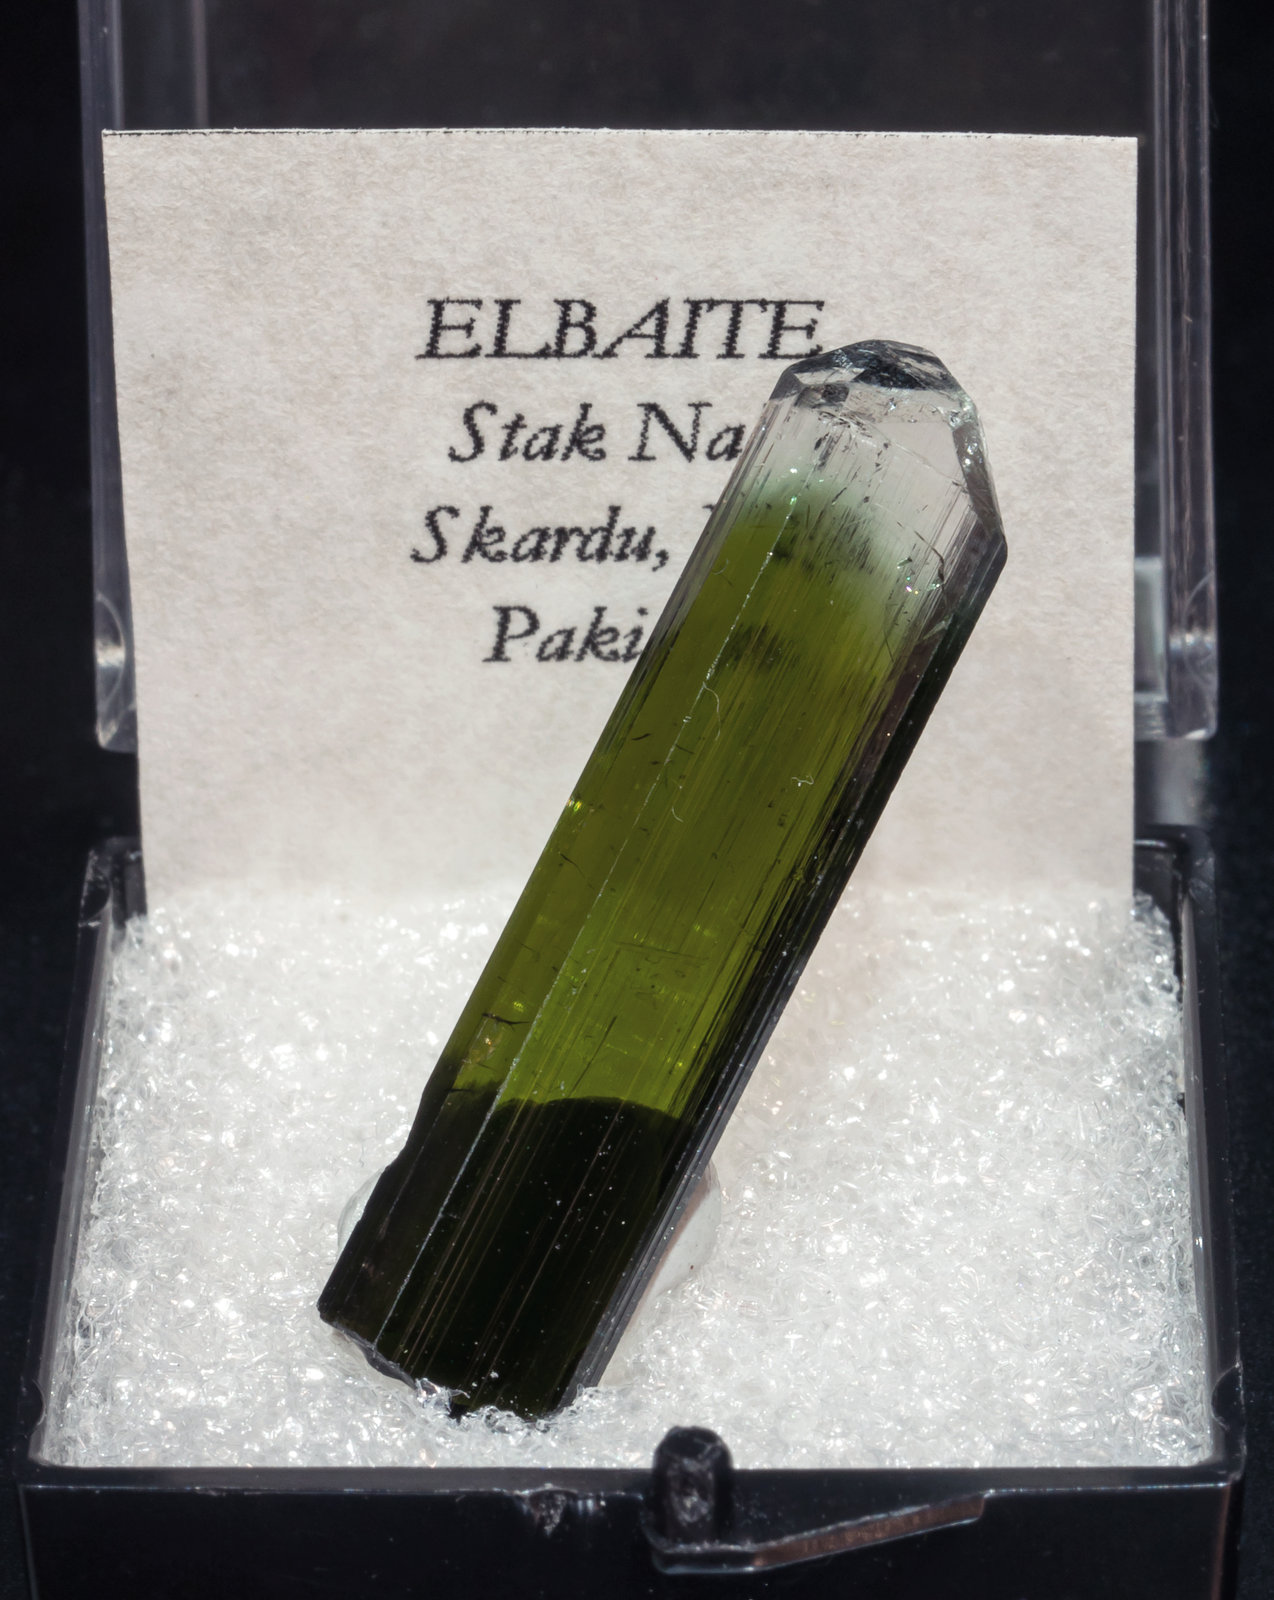 specimens/s_imagesAL4/Elbaite-TZ26AL4f1.jpg